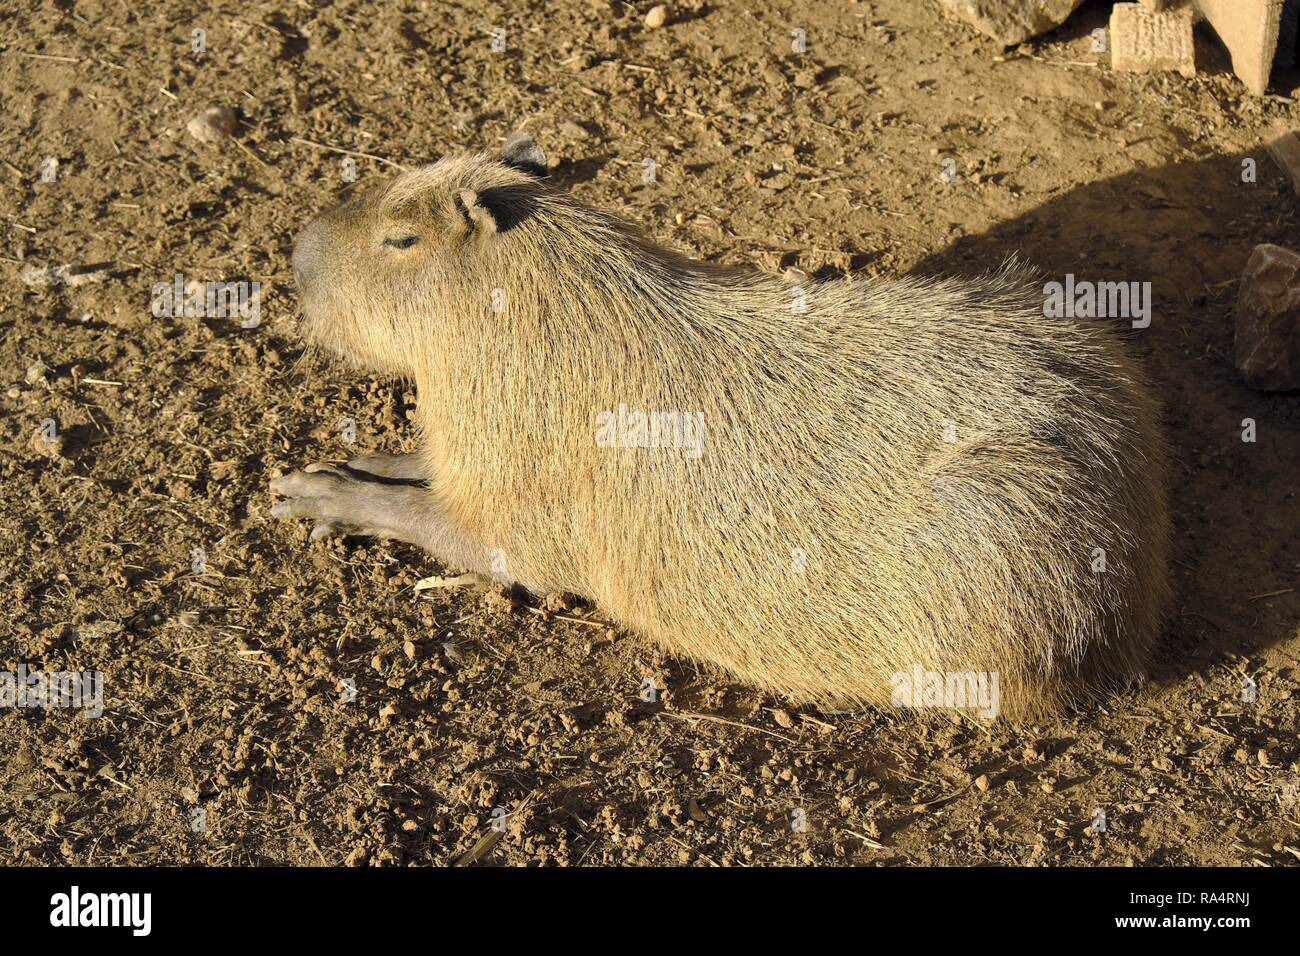 Kapibara wielka - lac. Hydrochoerus hydrochaeris - w ogrodzie zoologicznym Single Capybara, known also as Chiguire or Carpincho, Hydrochoerus hydrochaeris, in a zoological garden Stock Photo